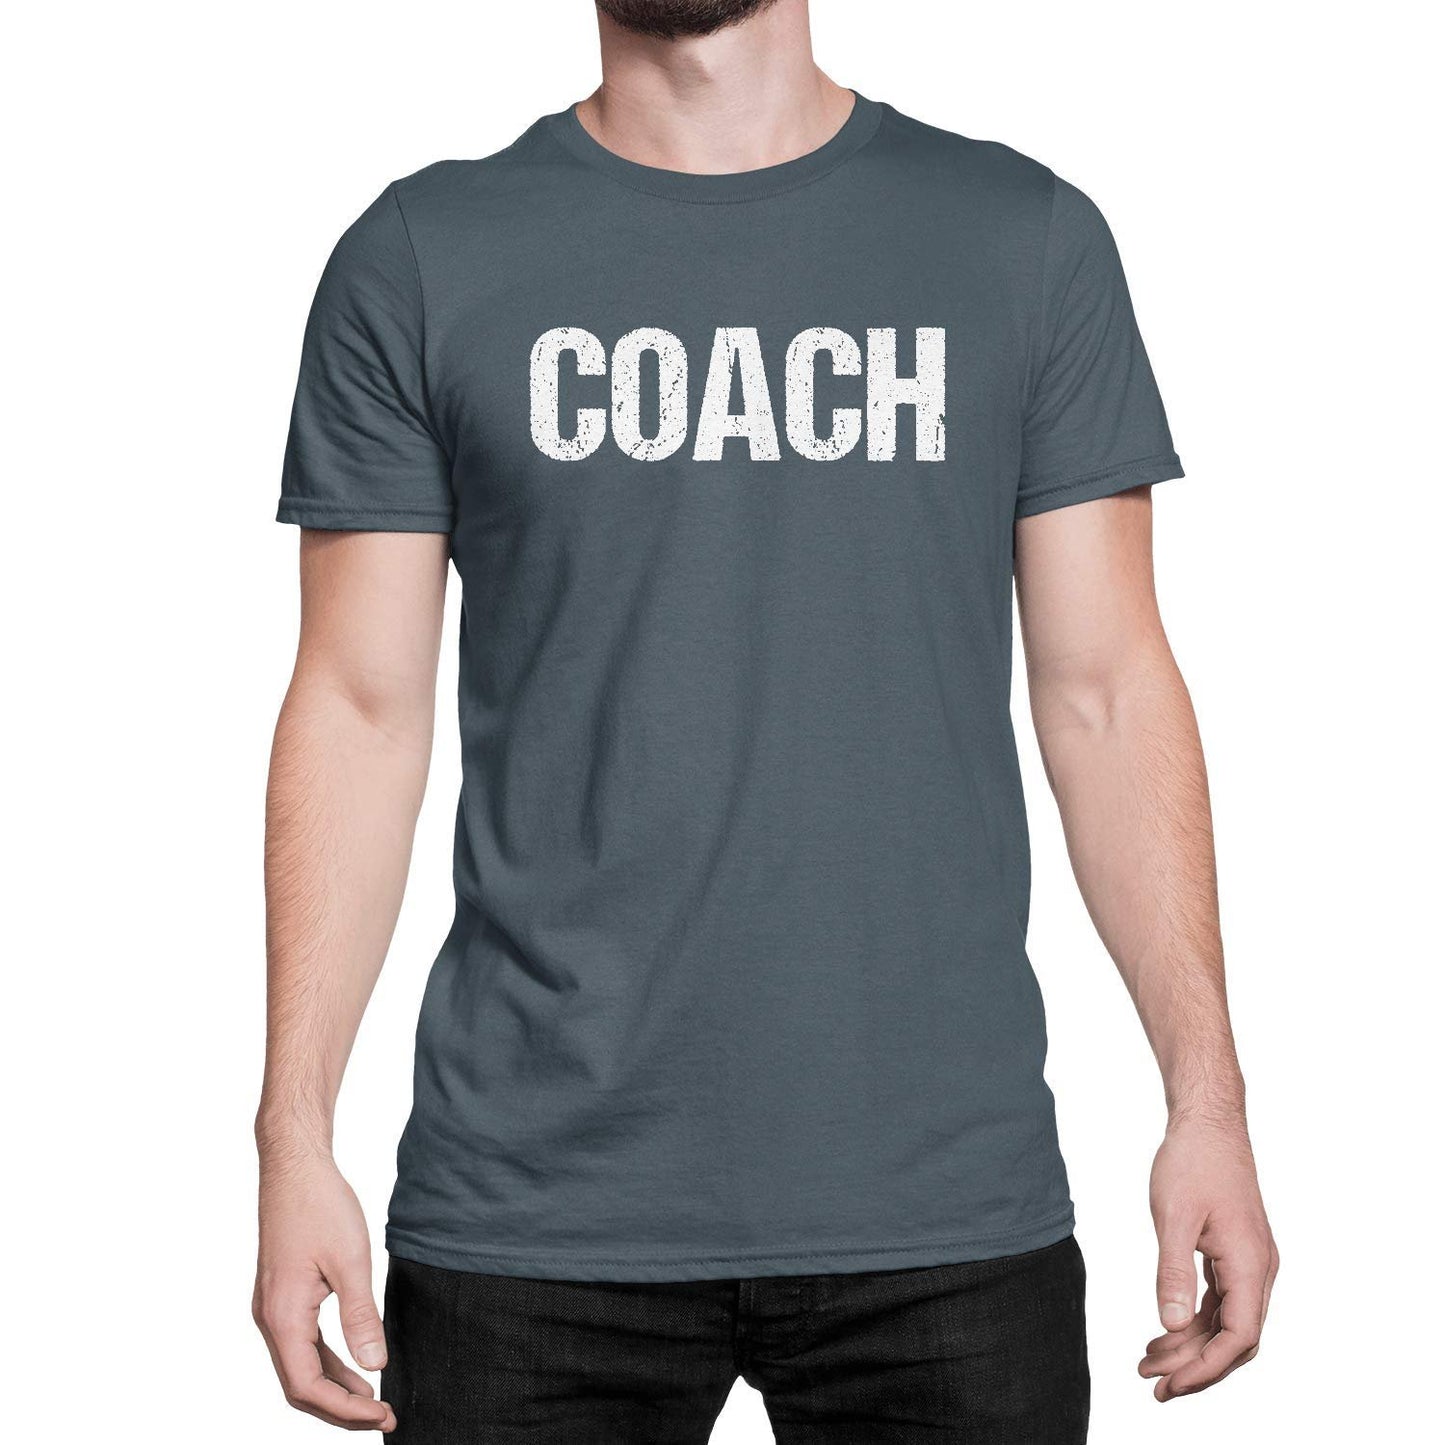 Coach T-Shirt Adult Mens Tee Shirt Front Screen Printed Coaching Tshirt Charcoal & white